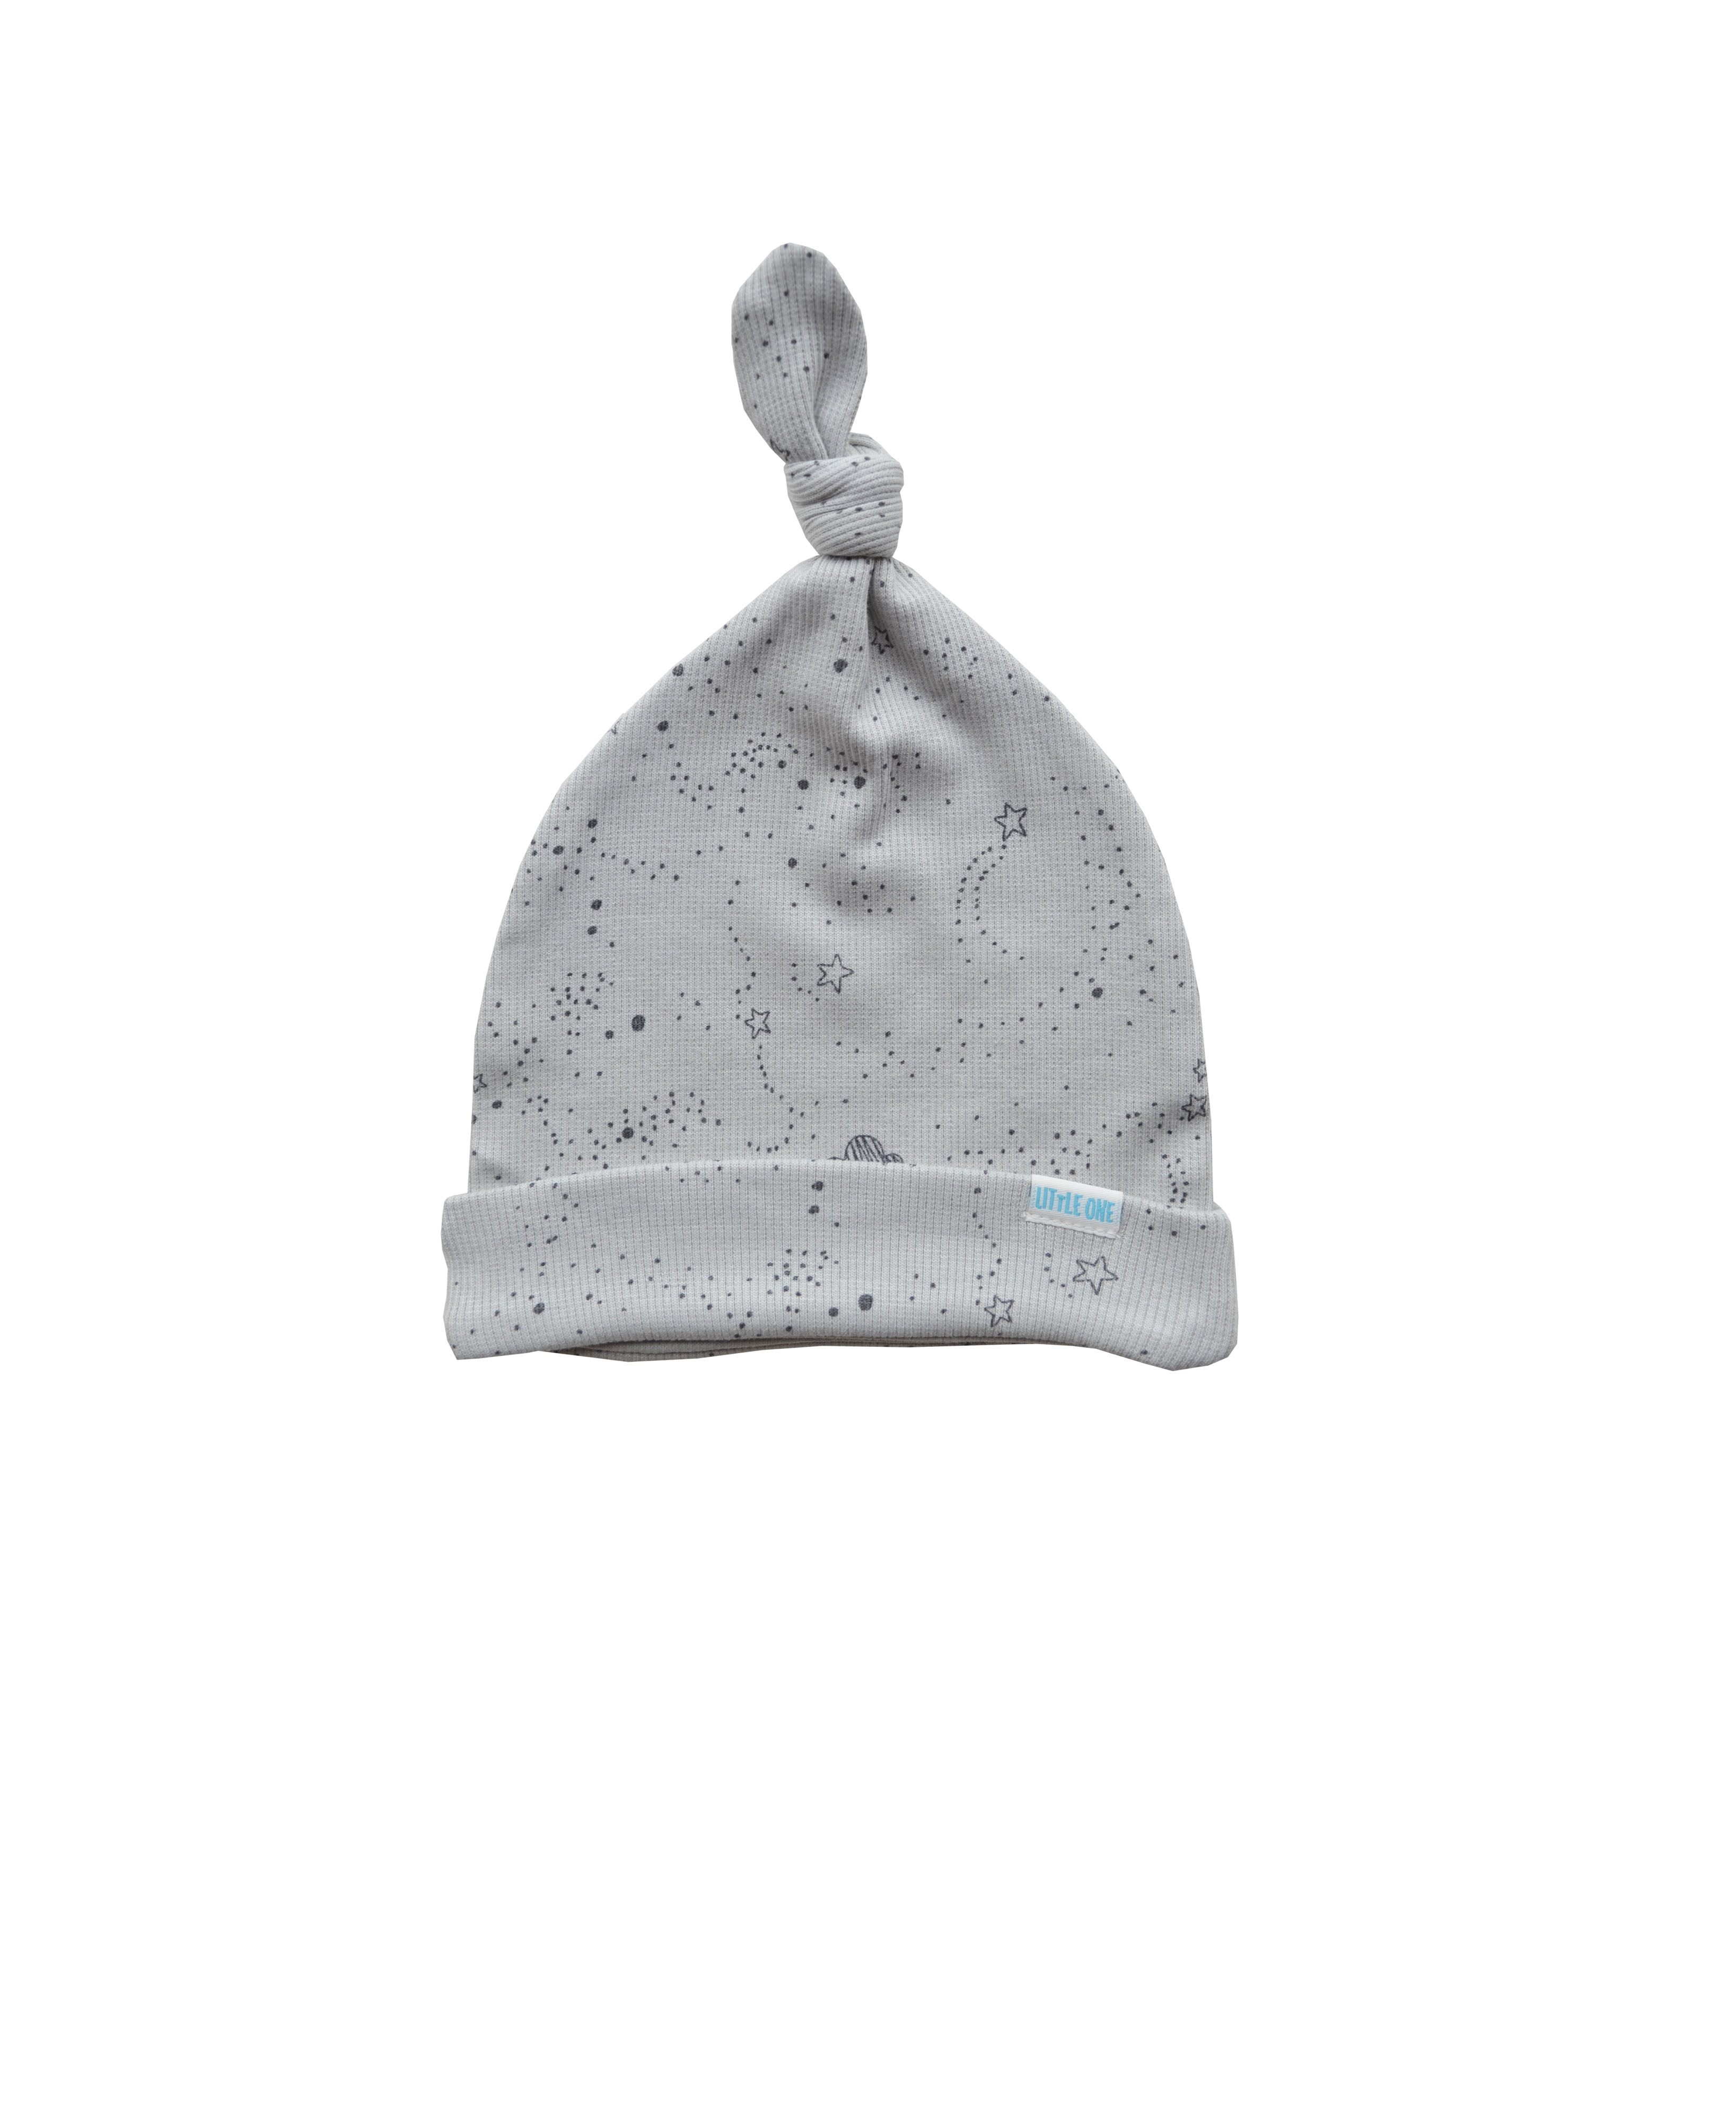 Allover Stars and Cloud print on Grey Beanie Cap (100% Cotton Rib)